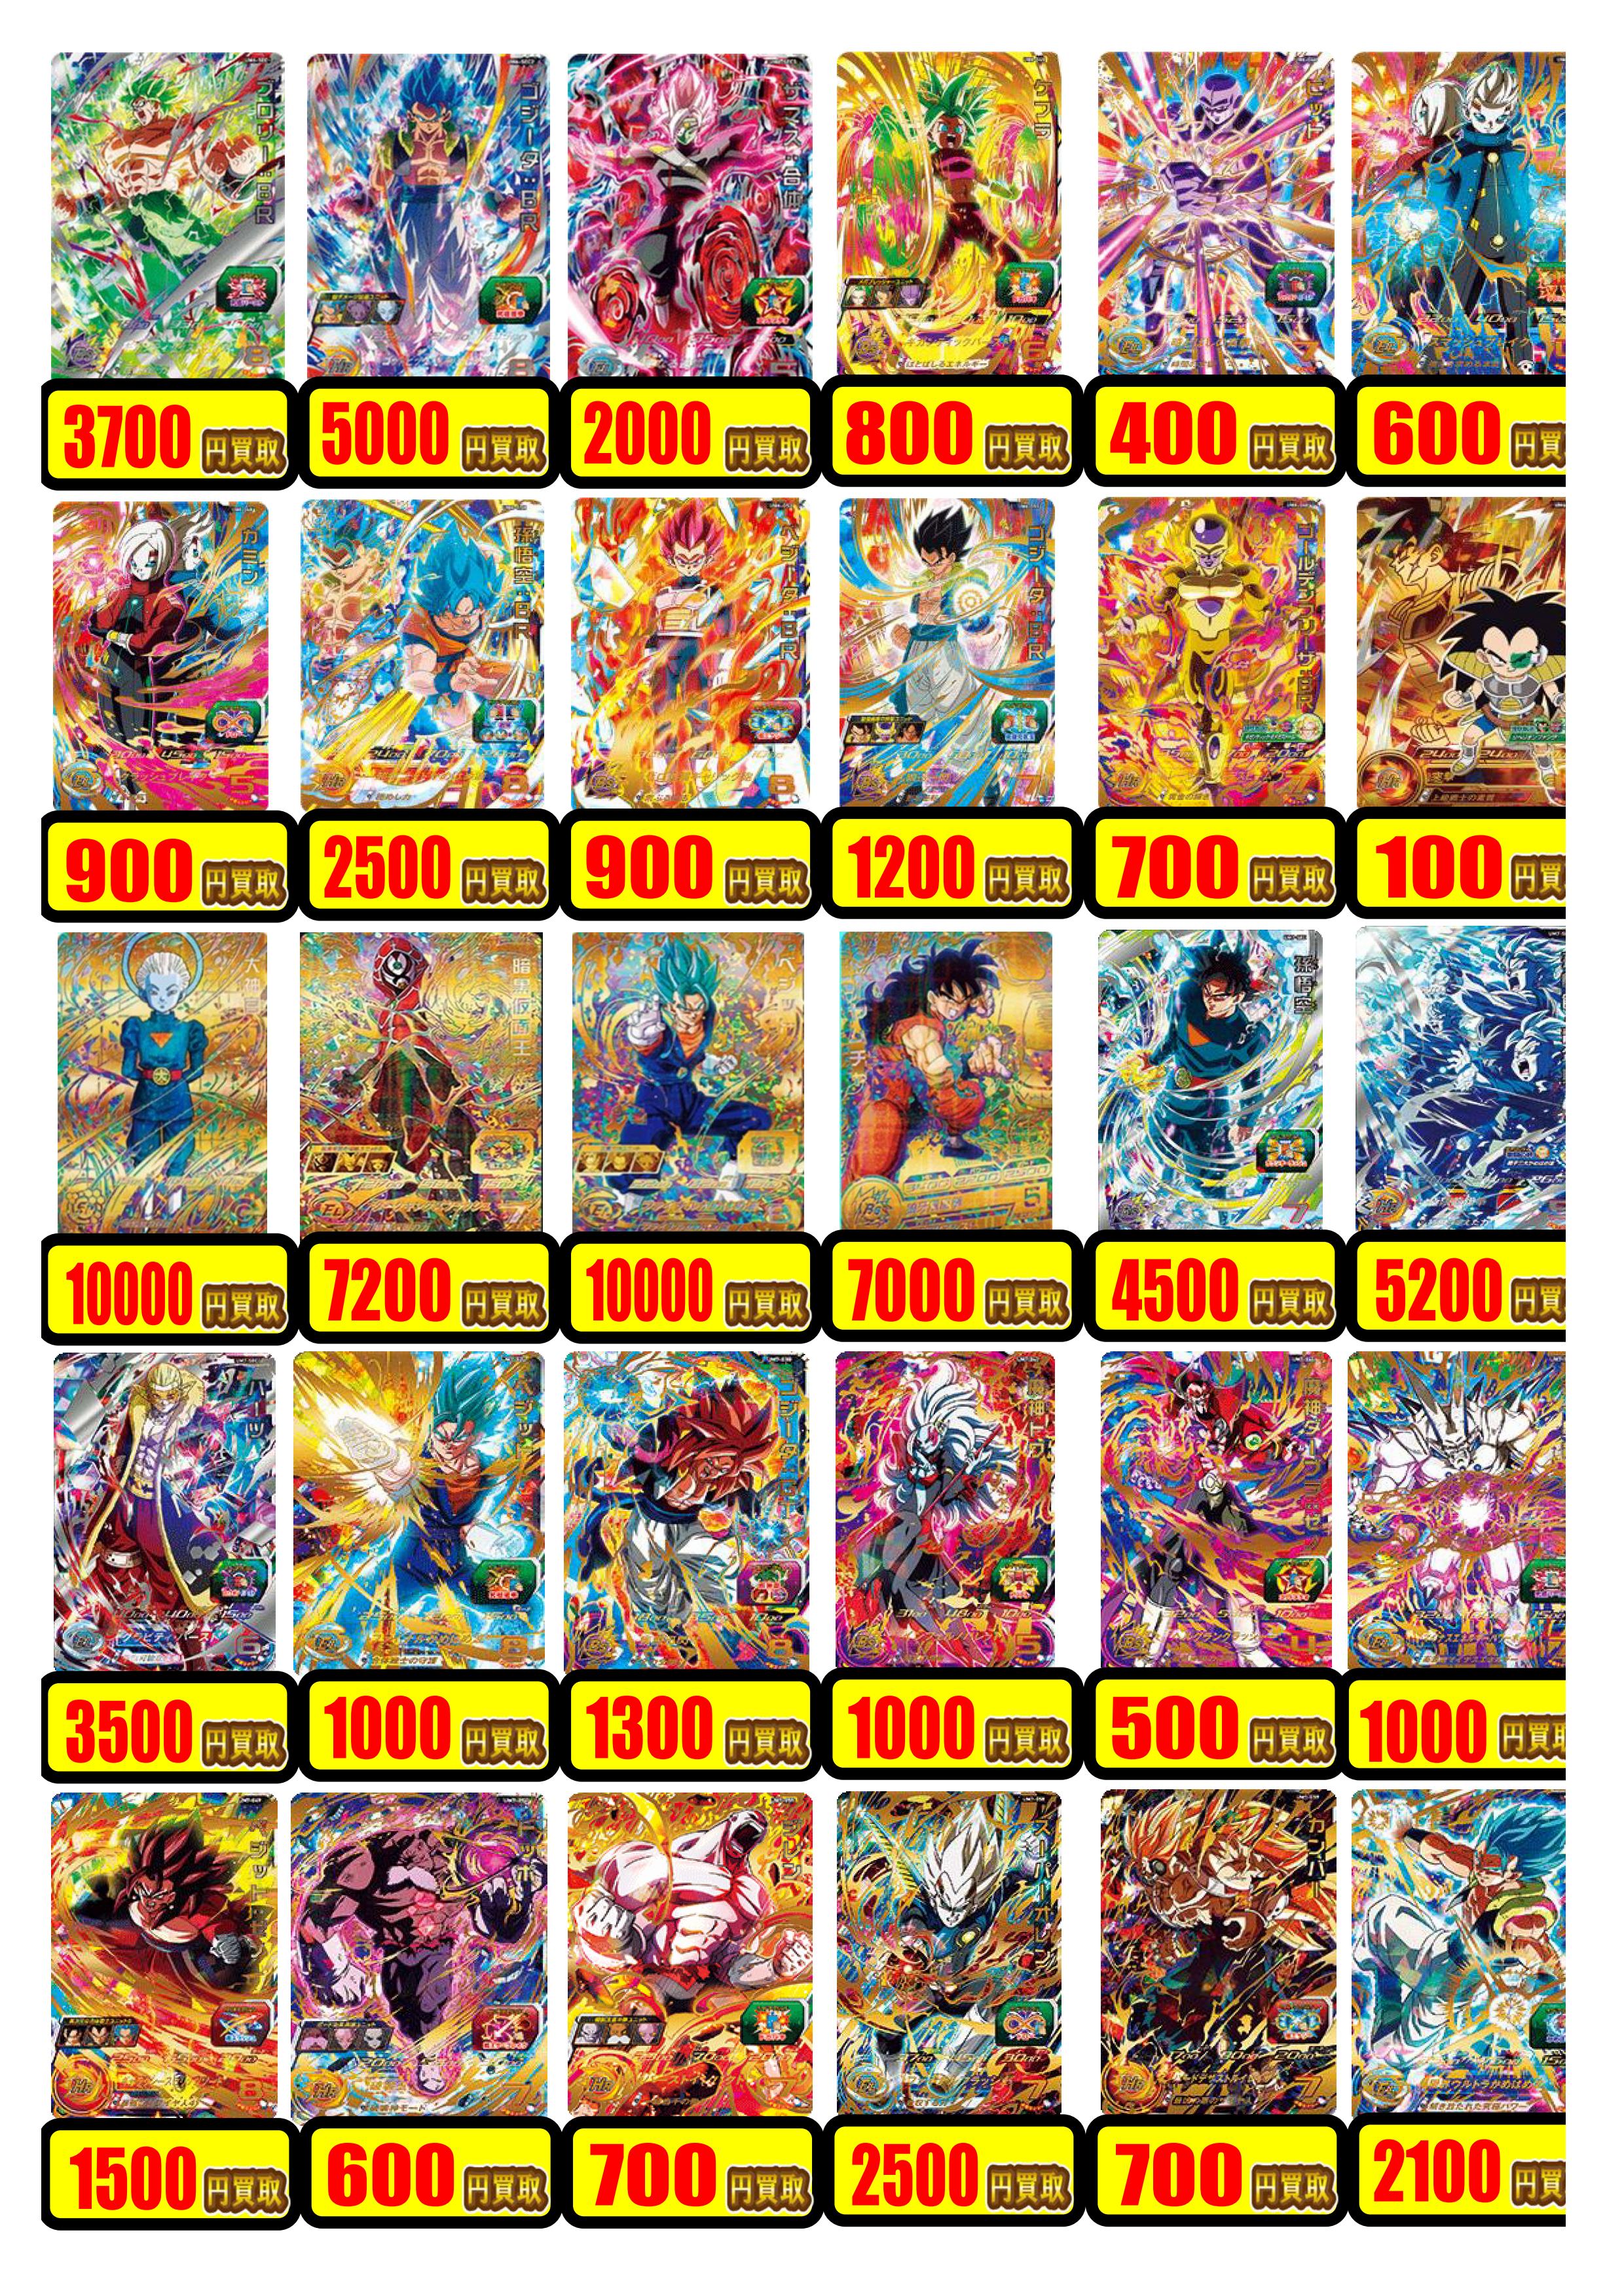 「DBH」 ドラゴンボールヒーローズ買取表 / 姫路店の店舗ブログ - カードラボ